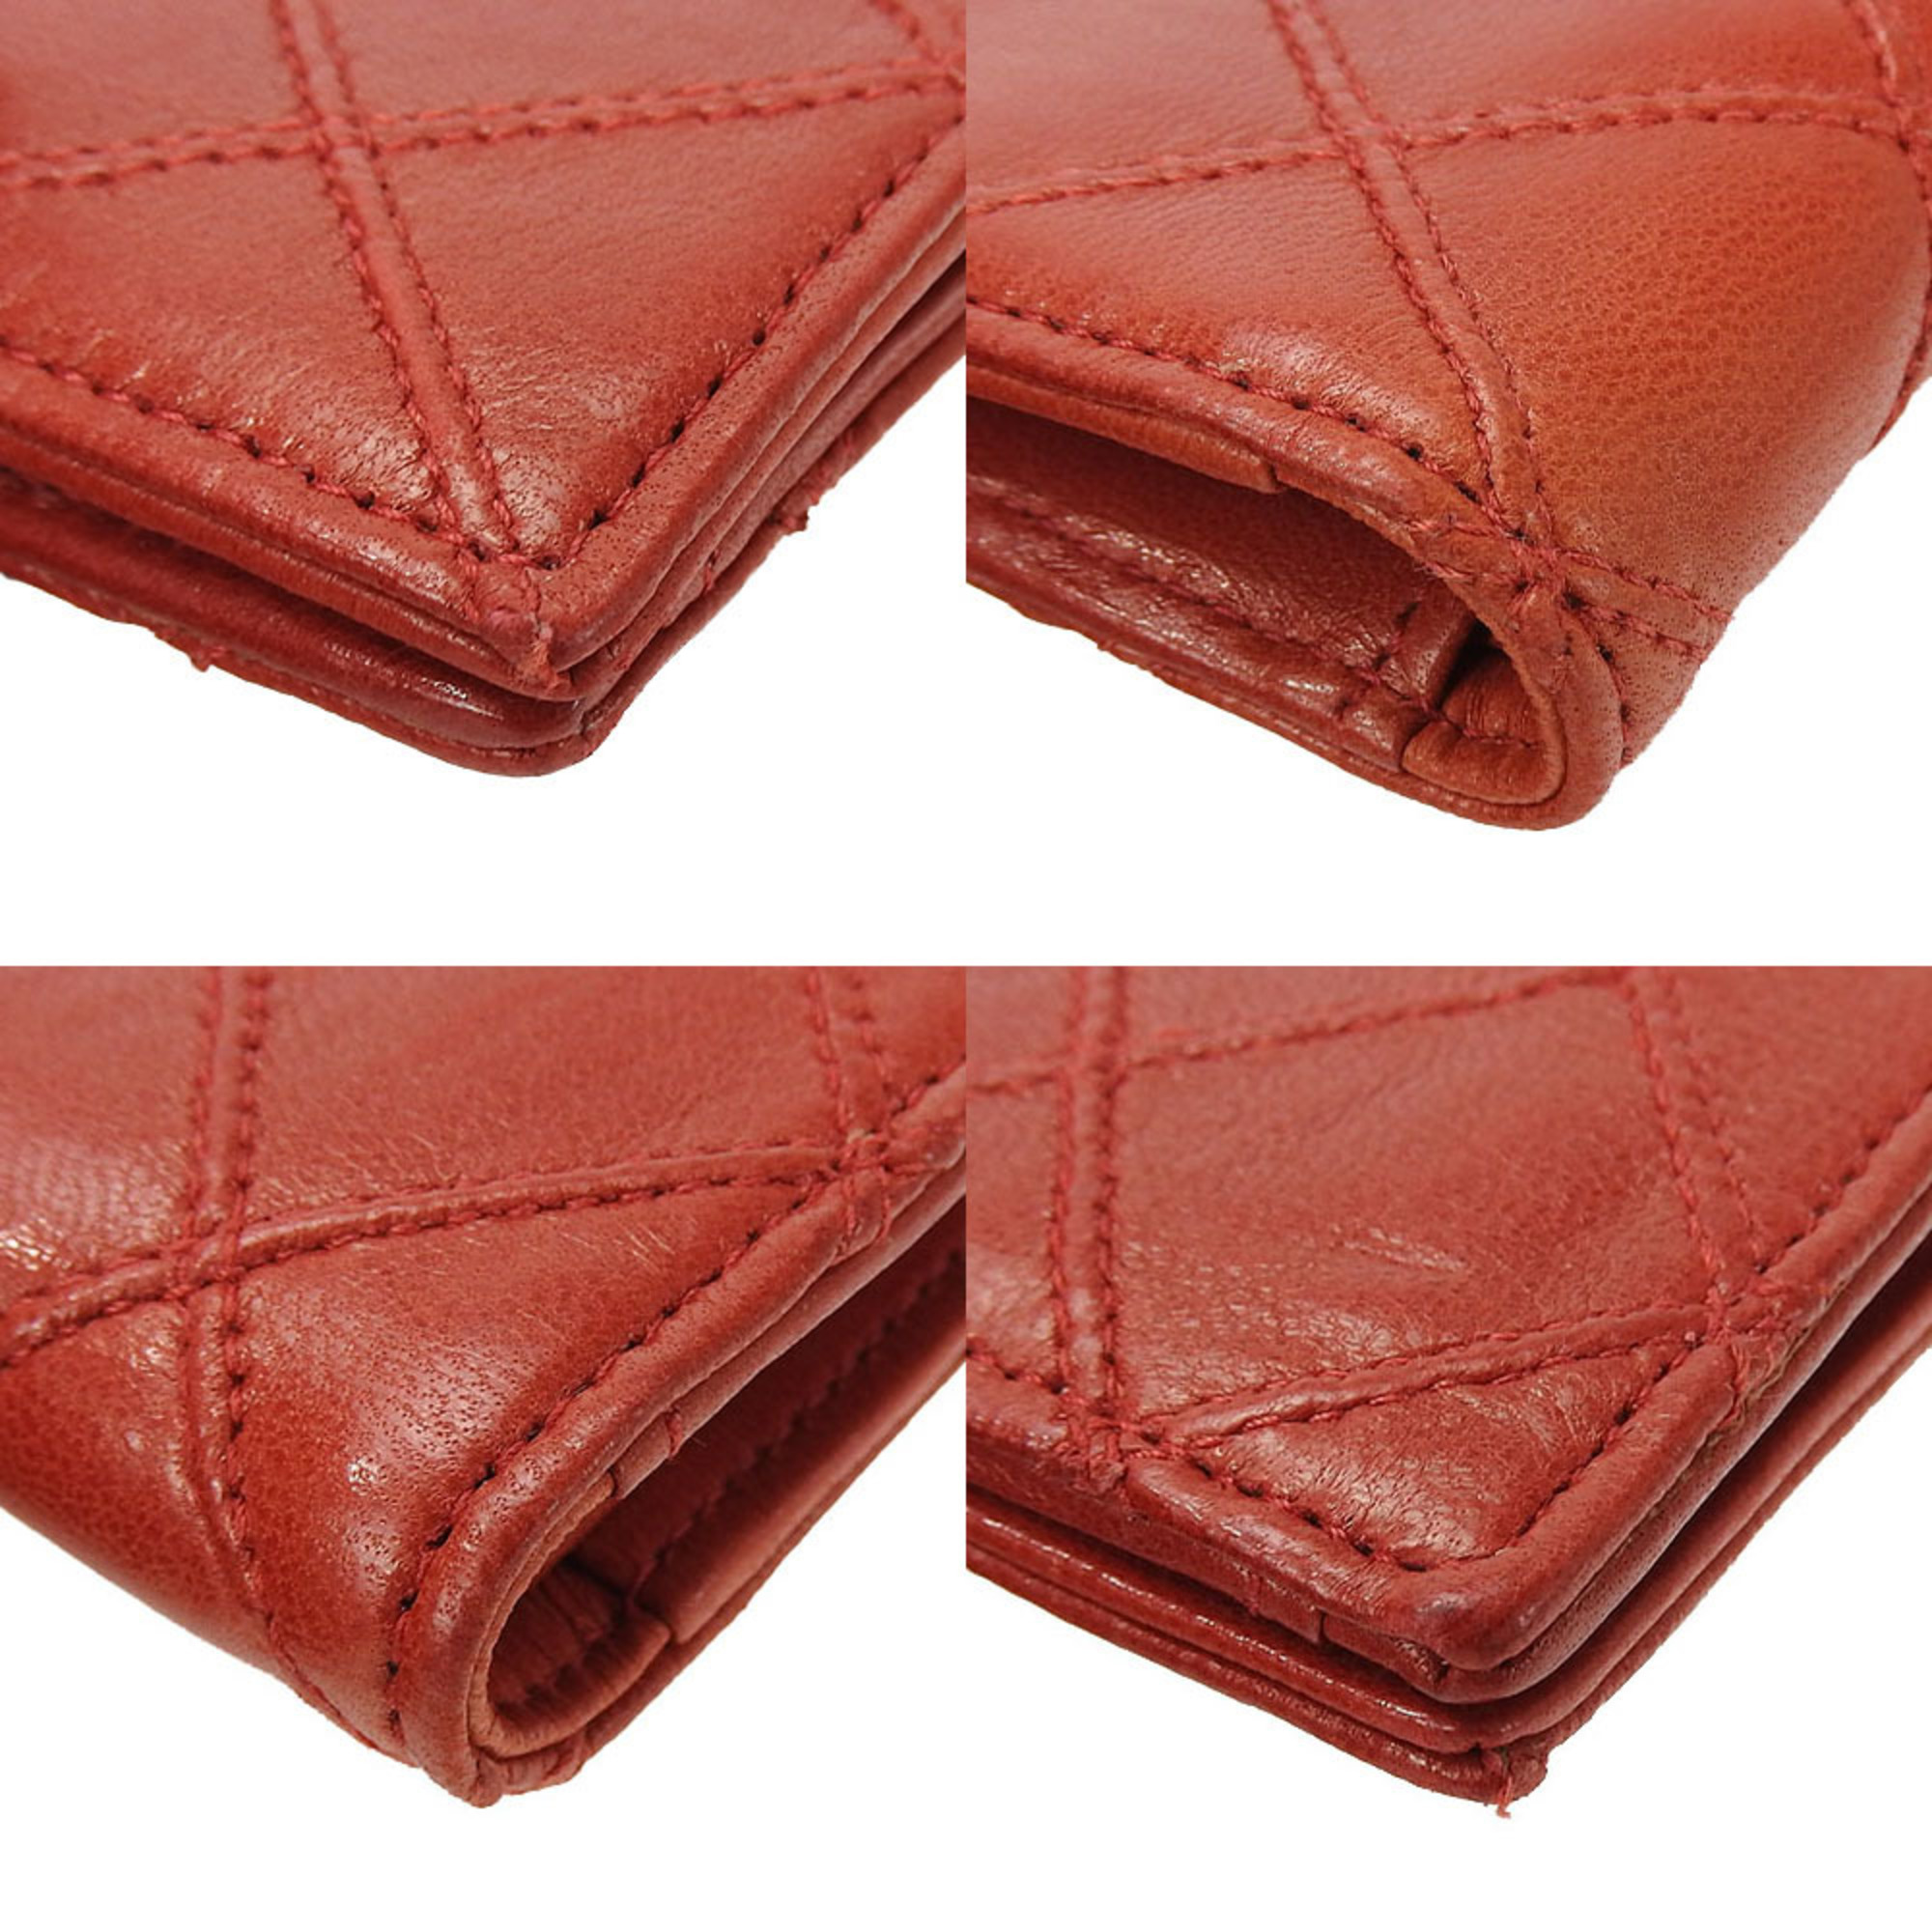 CHANEL Coin Card Case Red Coco Mark Bicolore Stitch Leather Accessories Ladies